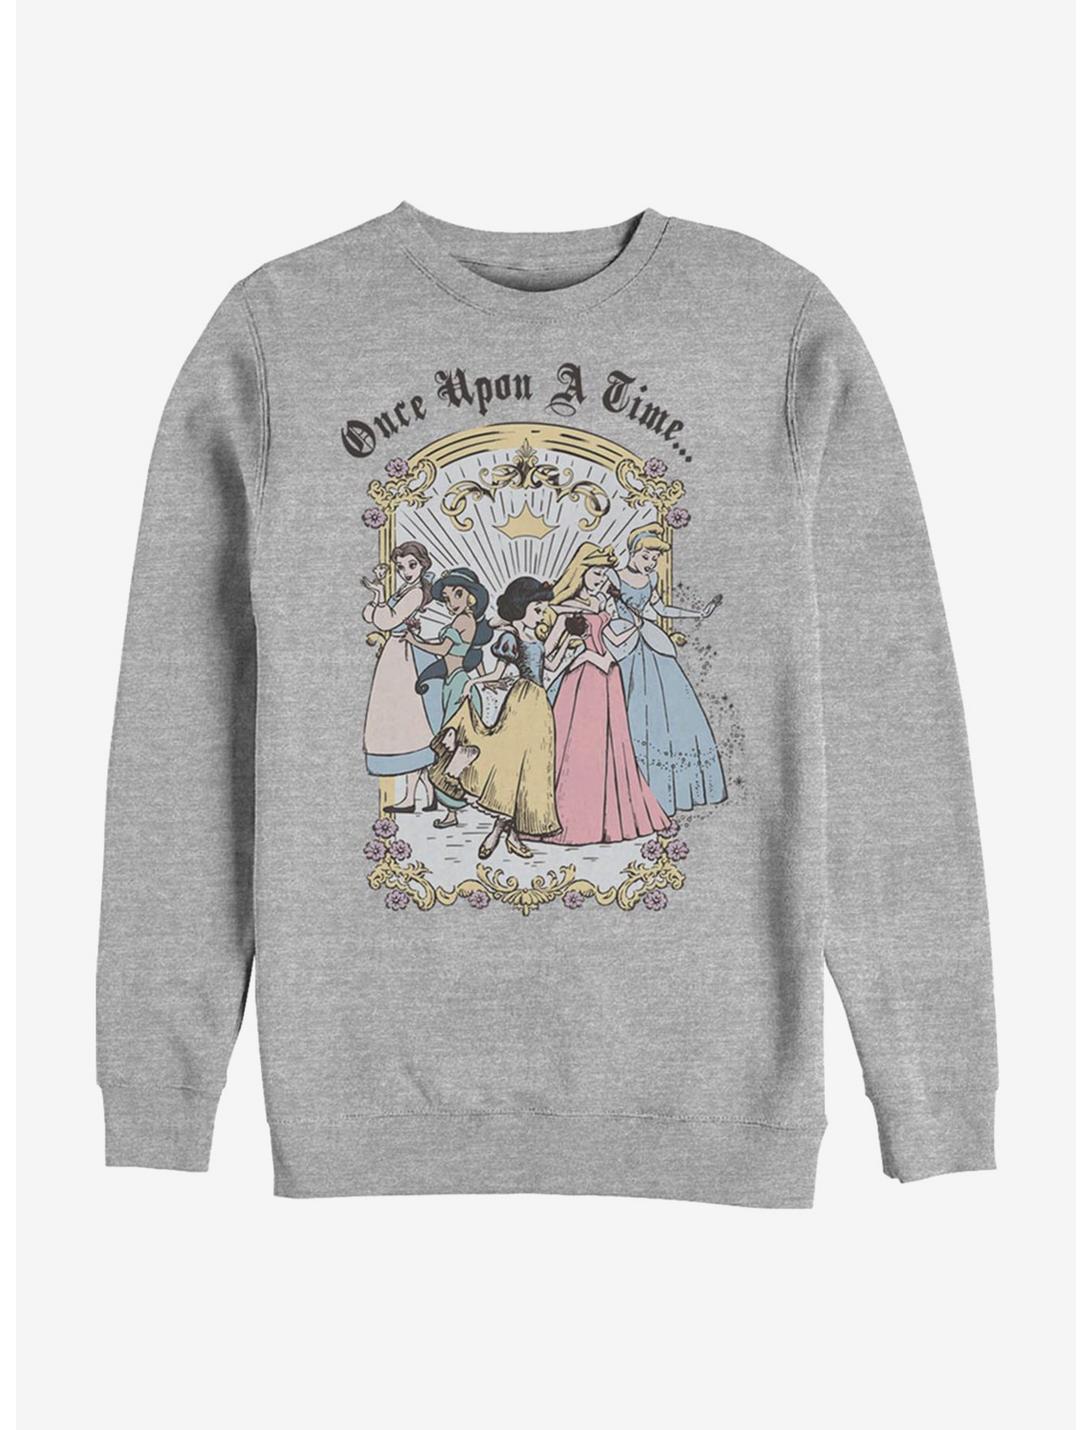 Disney Princess Classic Vintage Princess Group Crew Sweatshirt, ATH HTR, hi-res